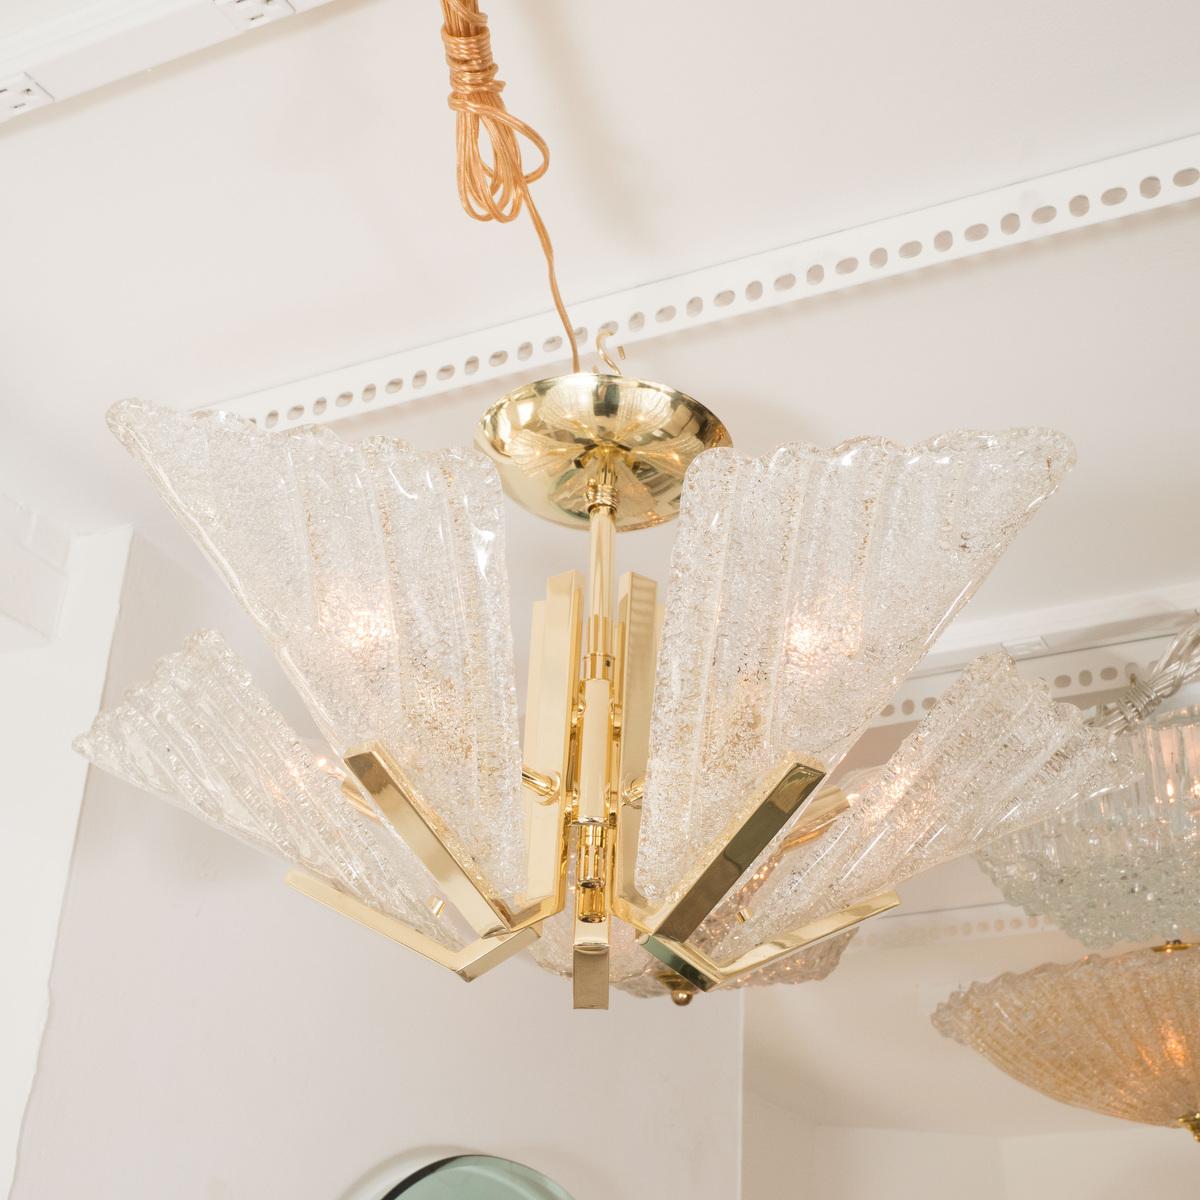 Brass chandelier featuring five textured glass shades.